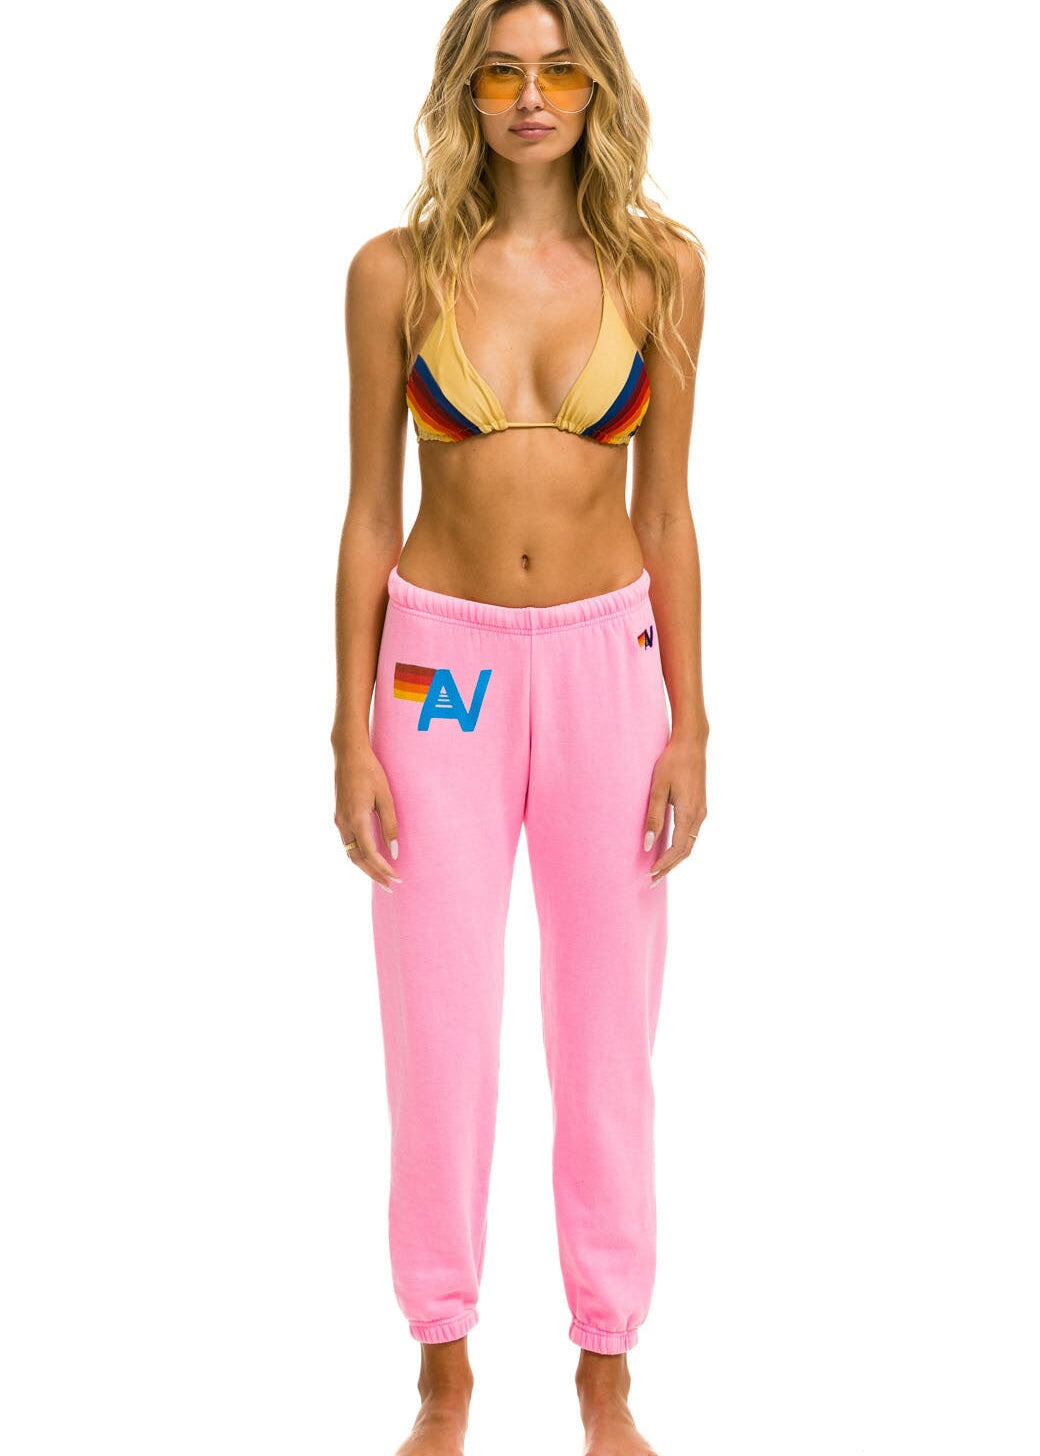 logo-sweatpants-neon-pink-womens-sweatpants-aviator-nation-535147_3000x_18764a82-c54f-4921-8062-359018ff5f85.jpg